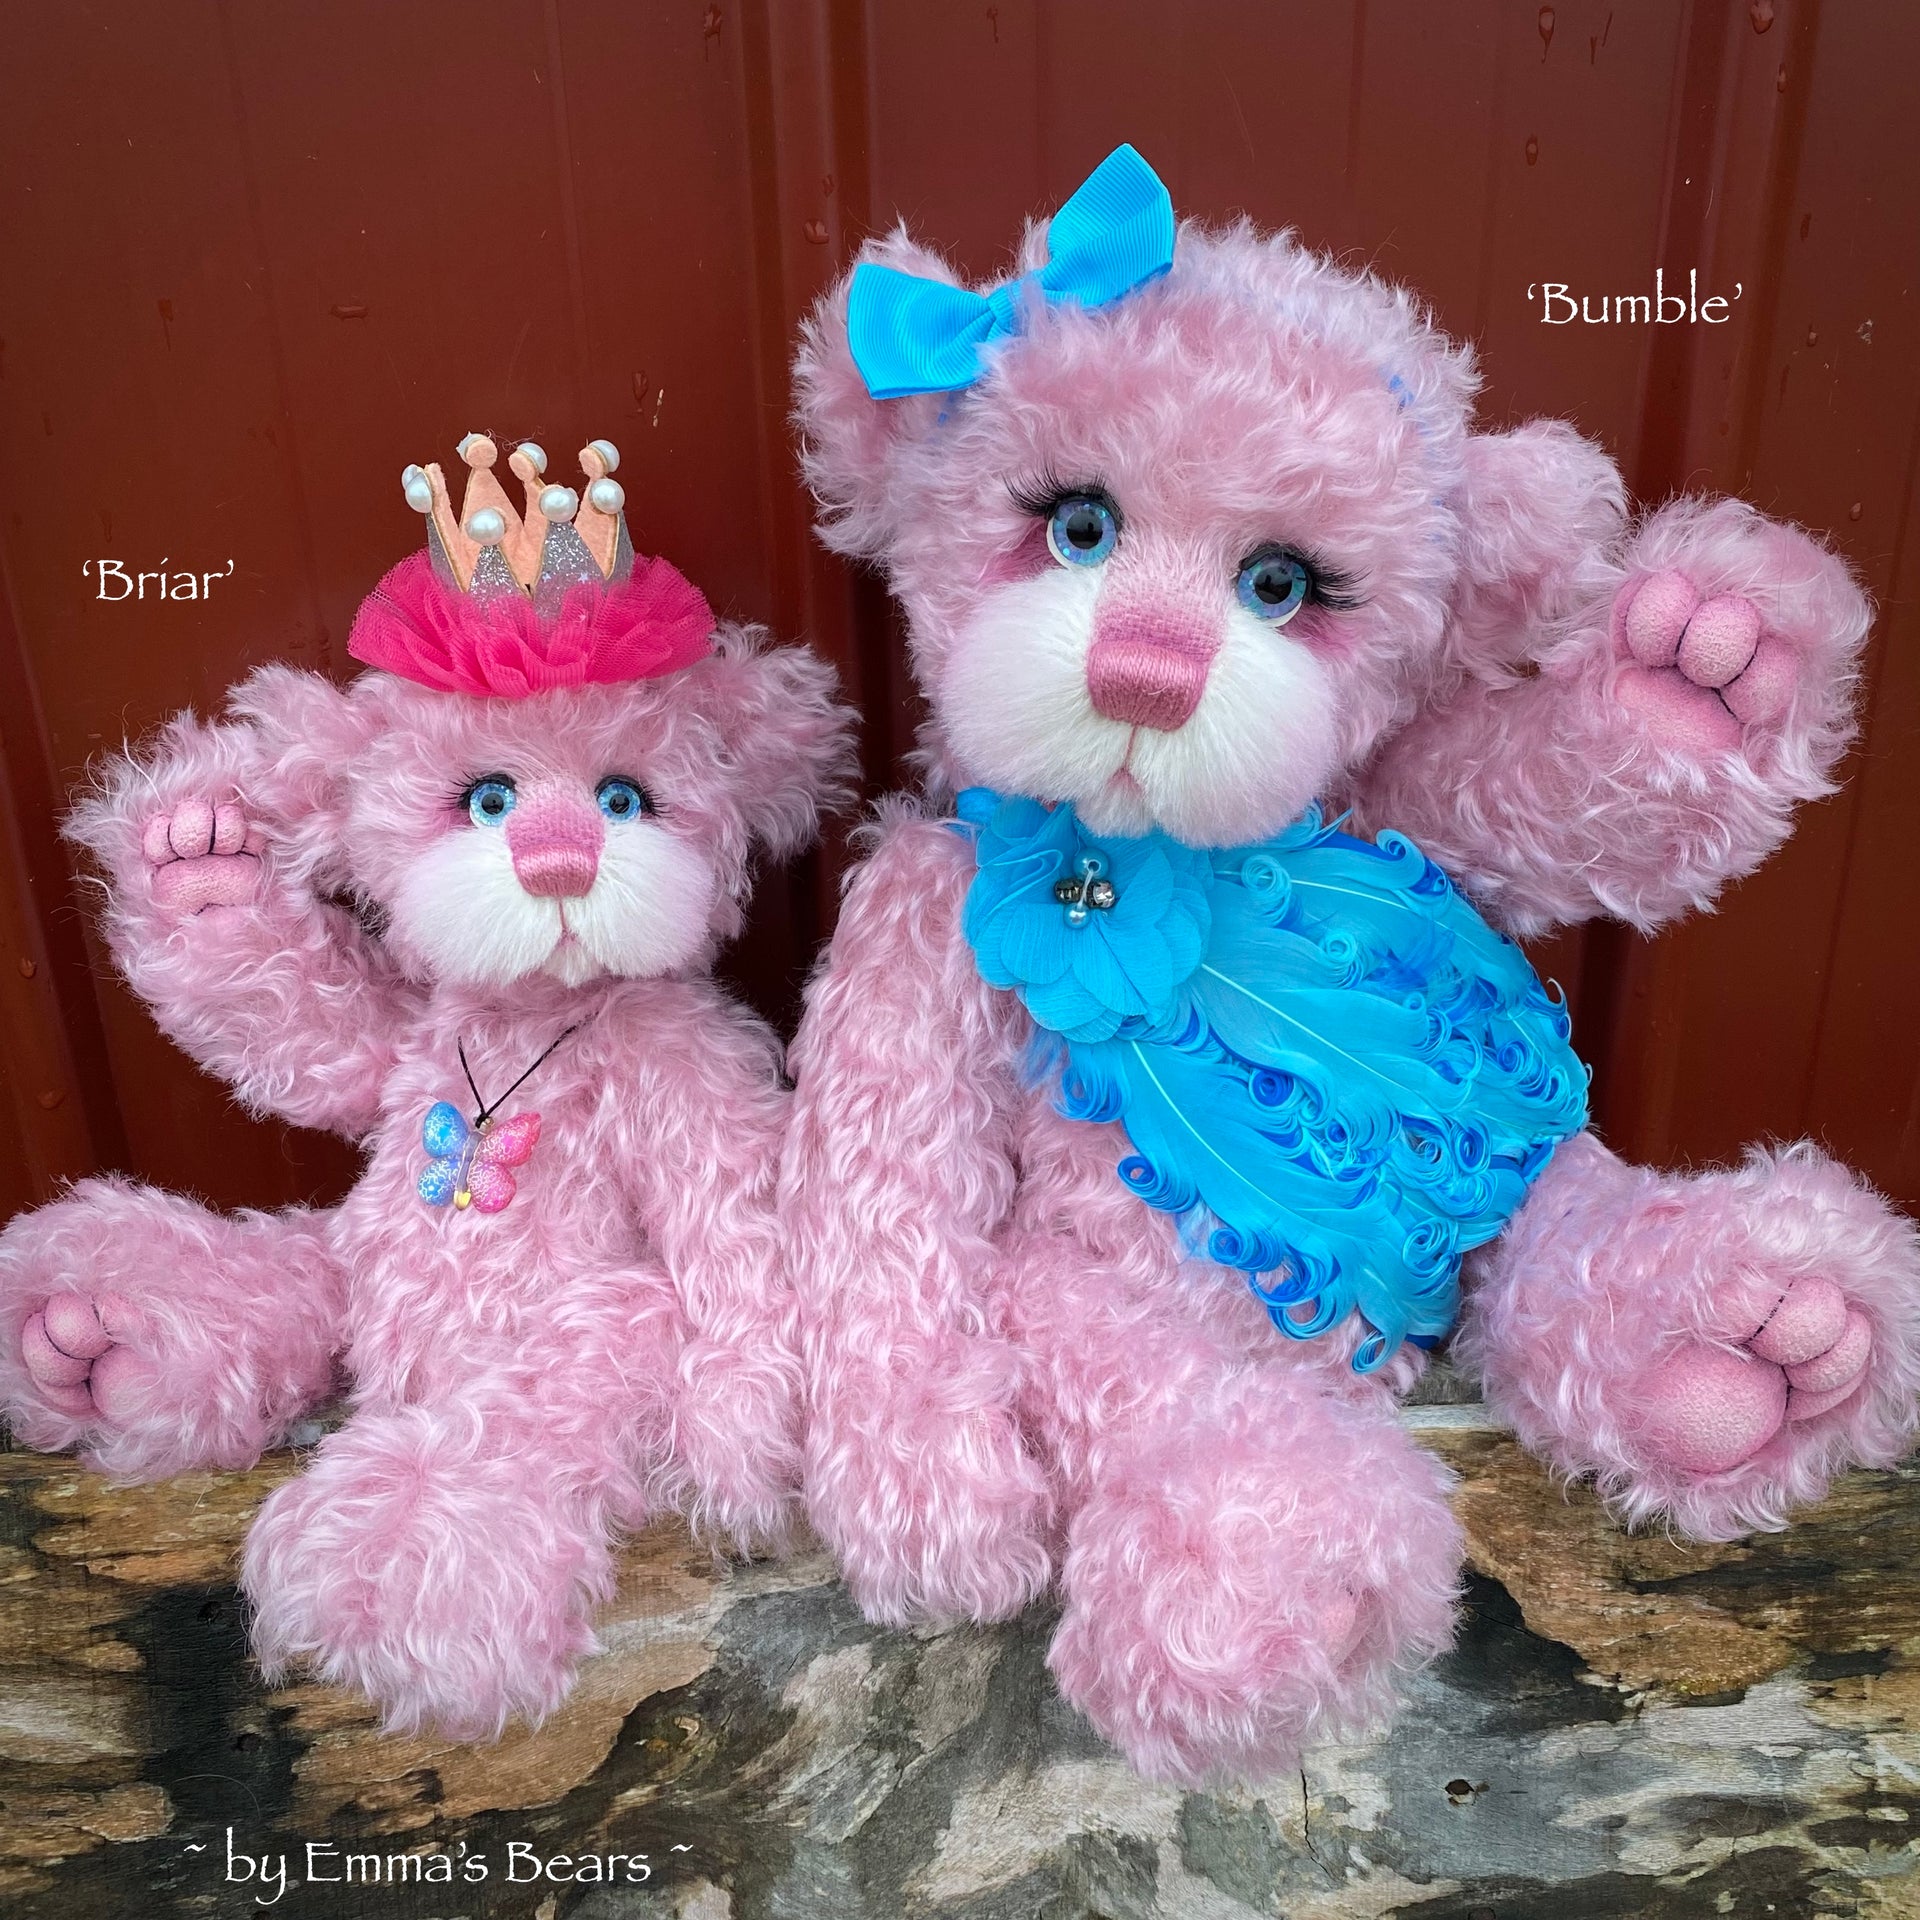 Bumble - 16" Curly Kid Mohair and Alpaca artist bear by Emma's Bears - OOAK